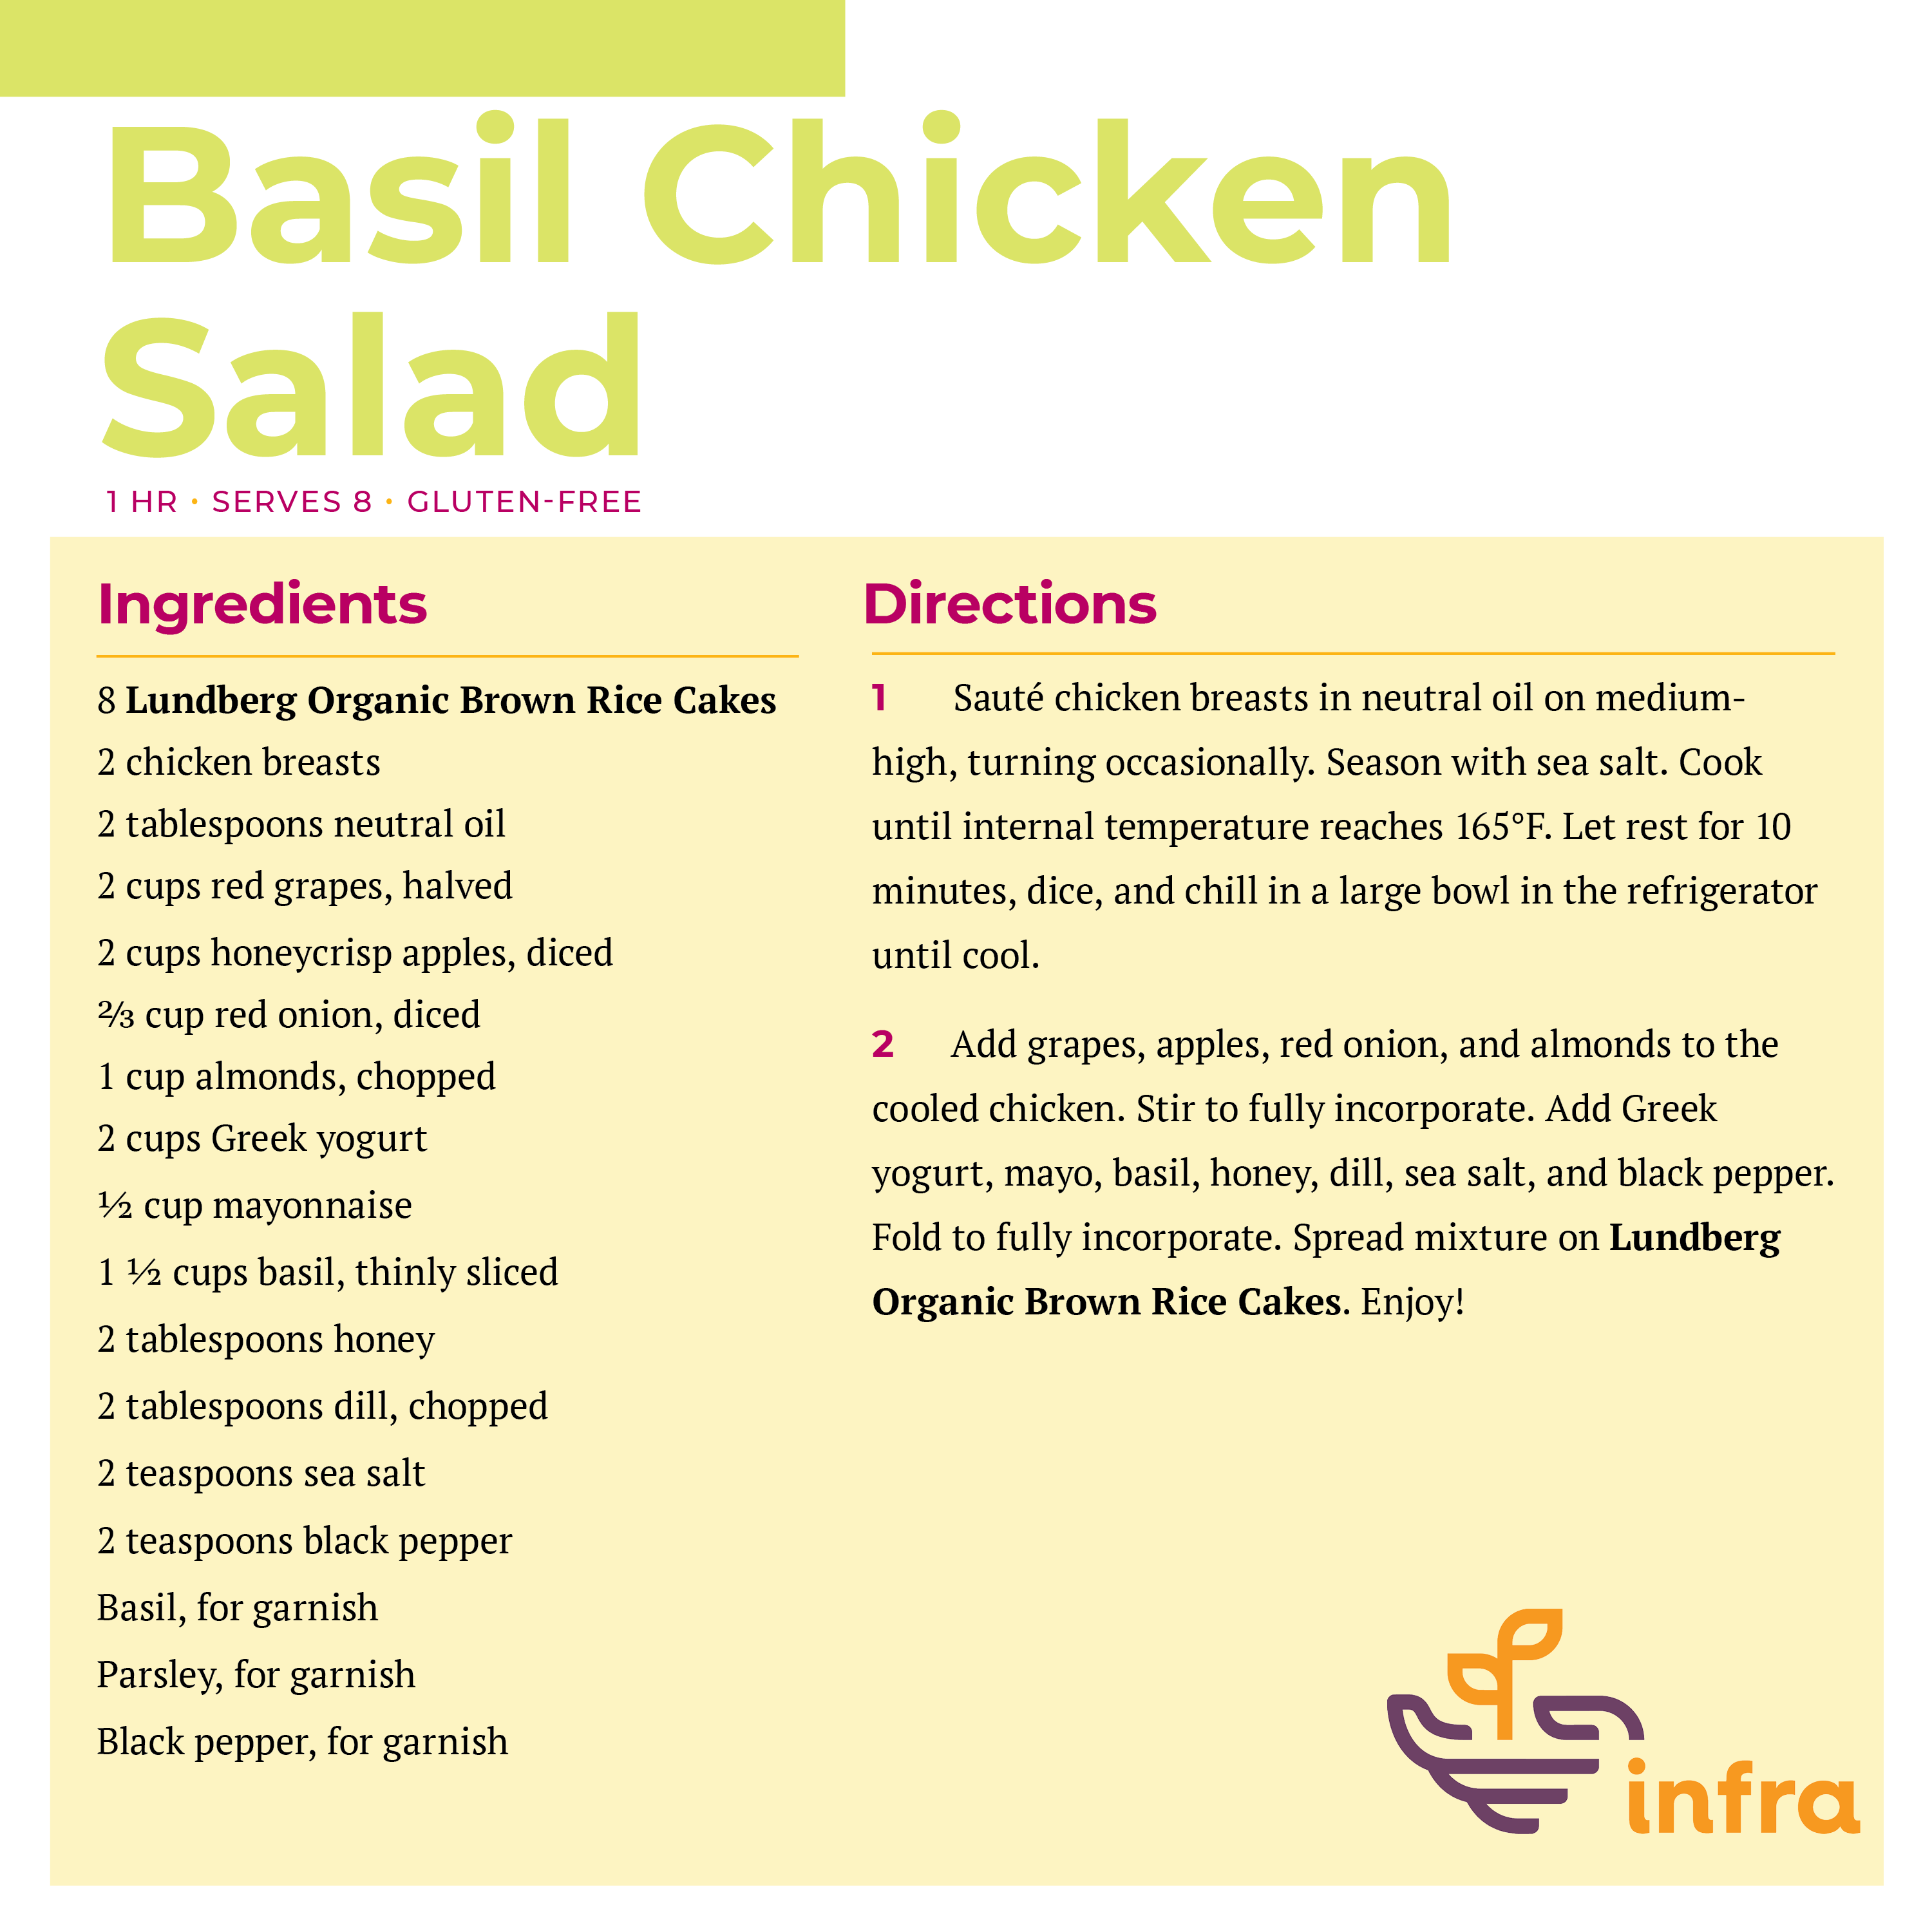 Basil Chicken Salad